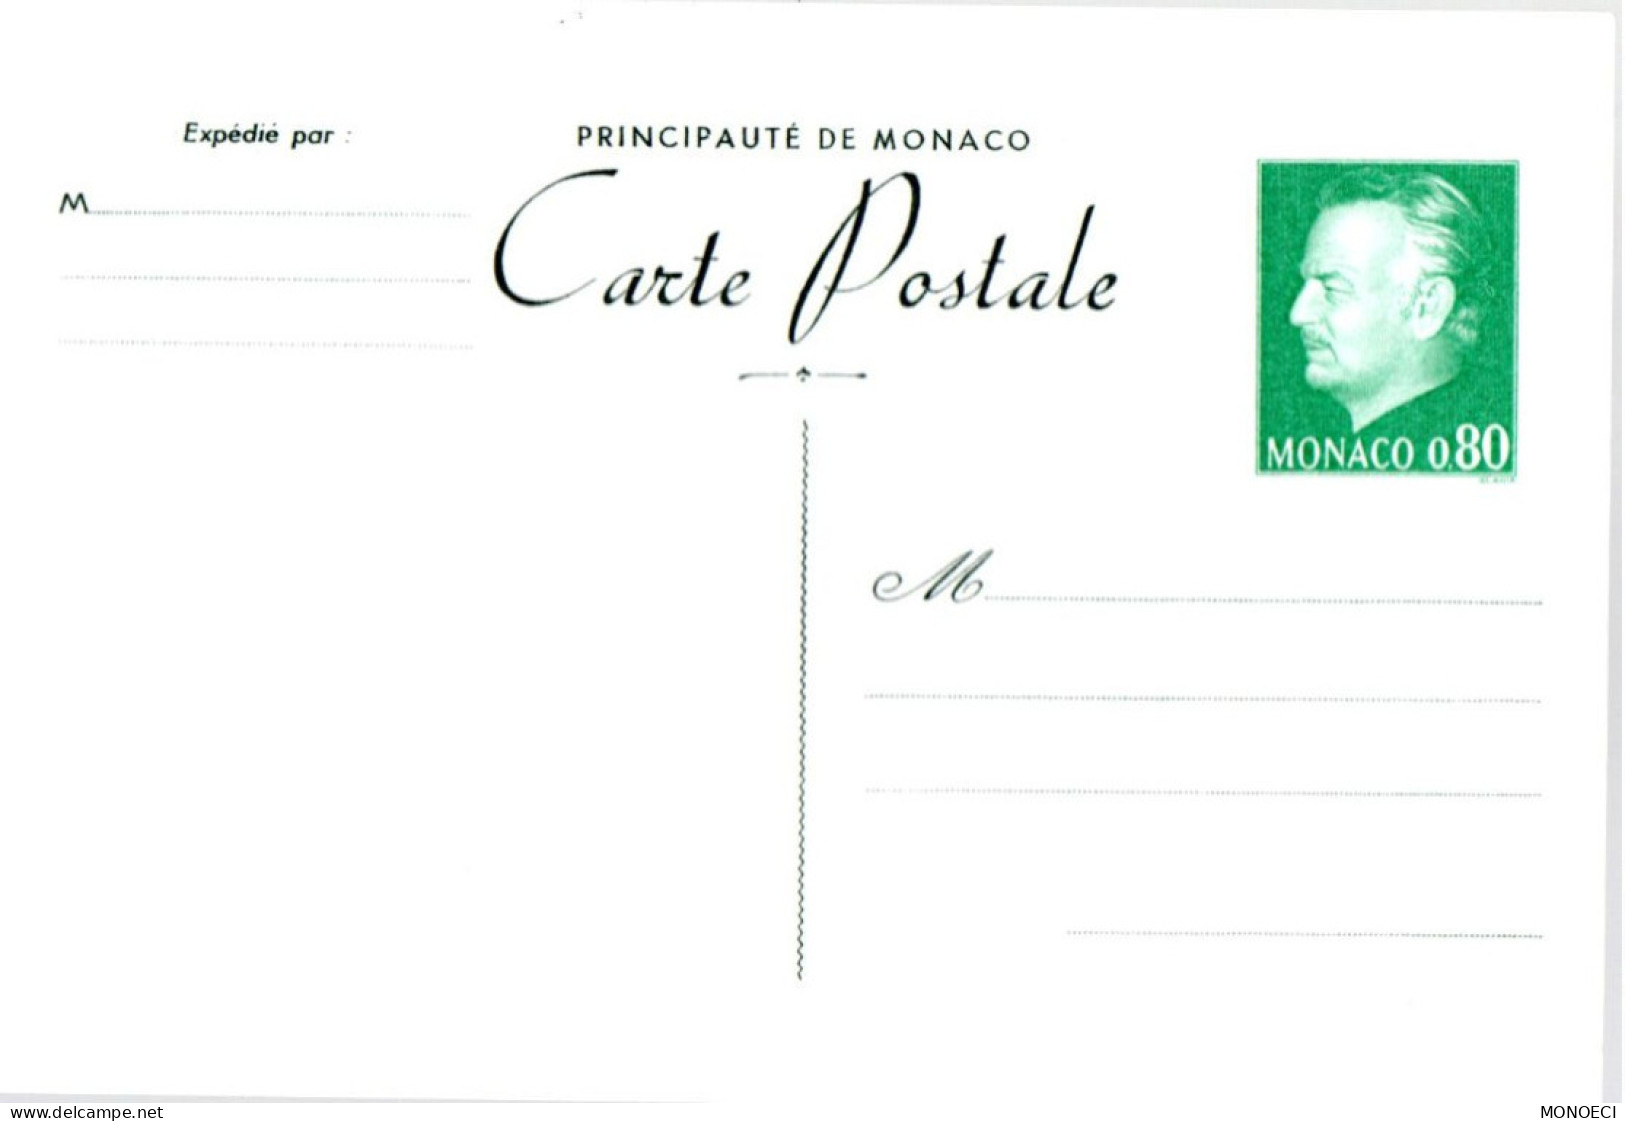 MONACO -- MONTE CARLO -- Monégasque -- ENTIER POSTAL -- CPA -- 0,80 C. Prince Rainier III (1977) - Interi Postali